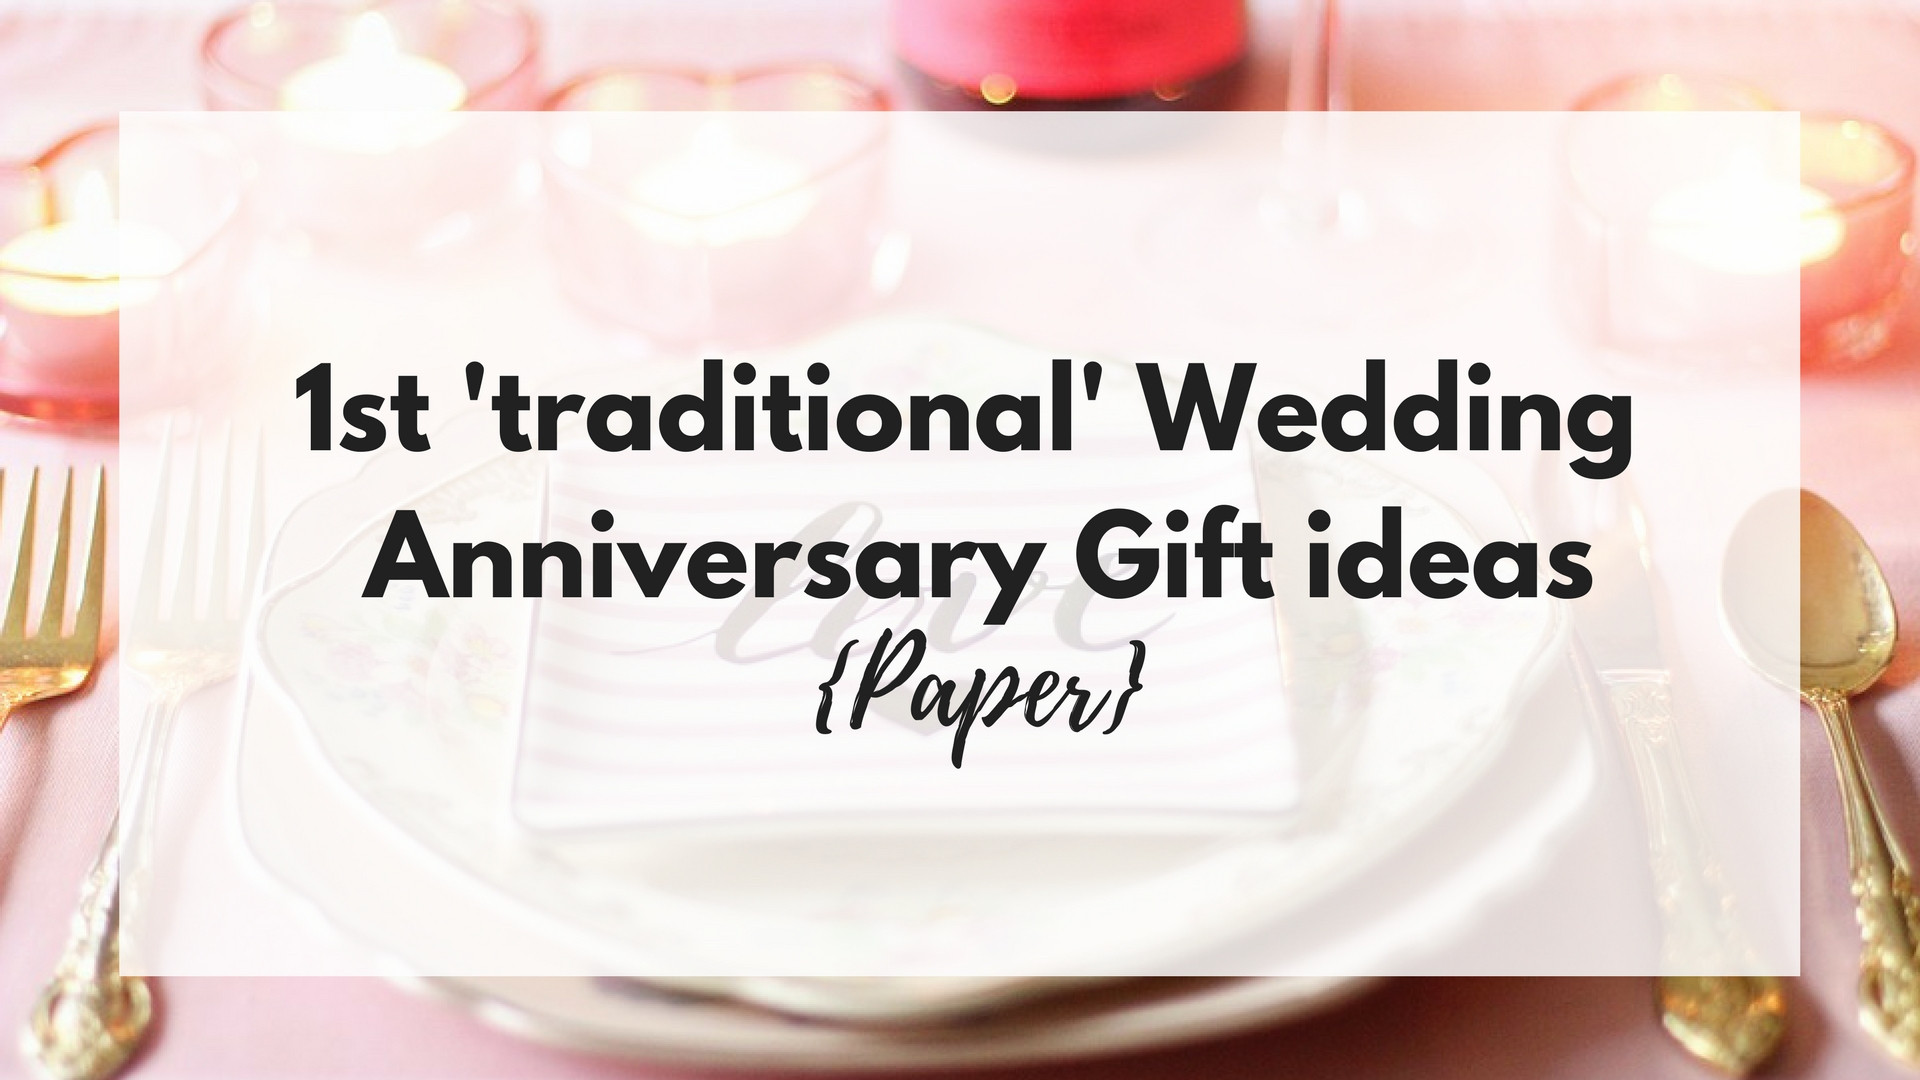 1St Wedding Anniversary Paper Gift Ideas
 1st ‘traditional’ Wedding Anniversary Gift ideas Paper